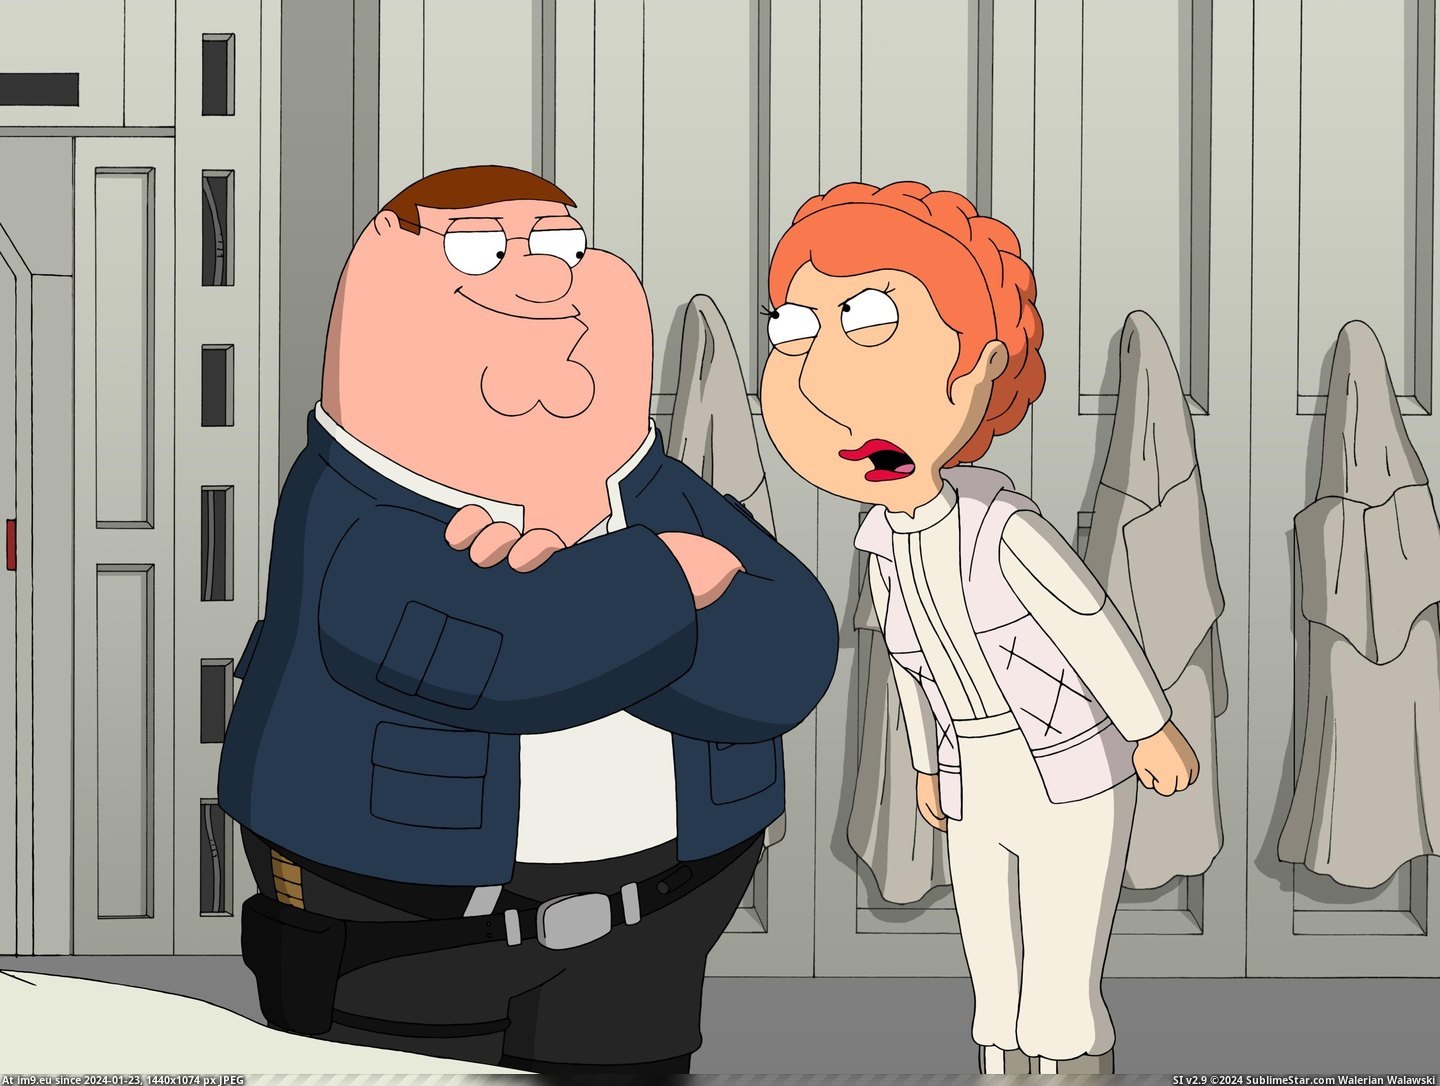 #Guy #Cartoon #Family Cartoon Family Guy 178528 Pic. (Изображение из альбом TV Shows HD Wallpapers))